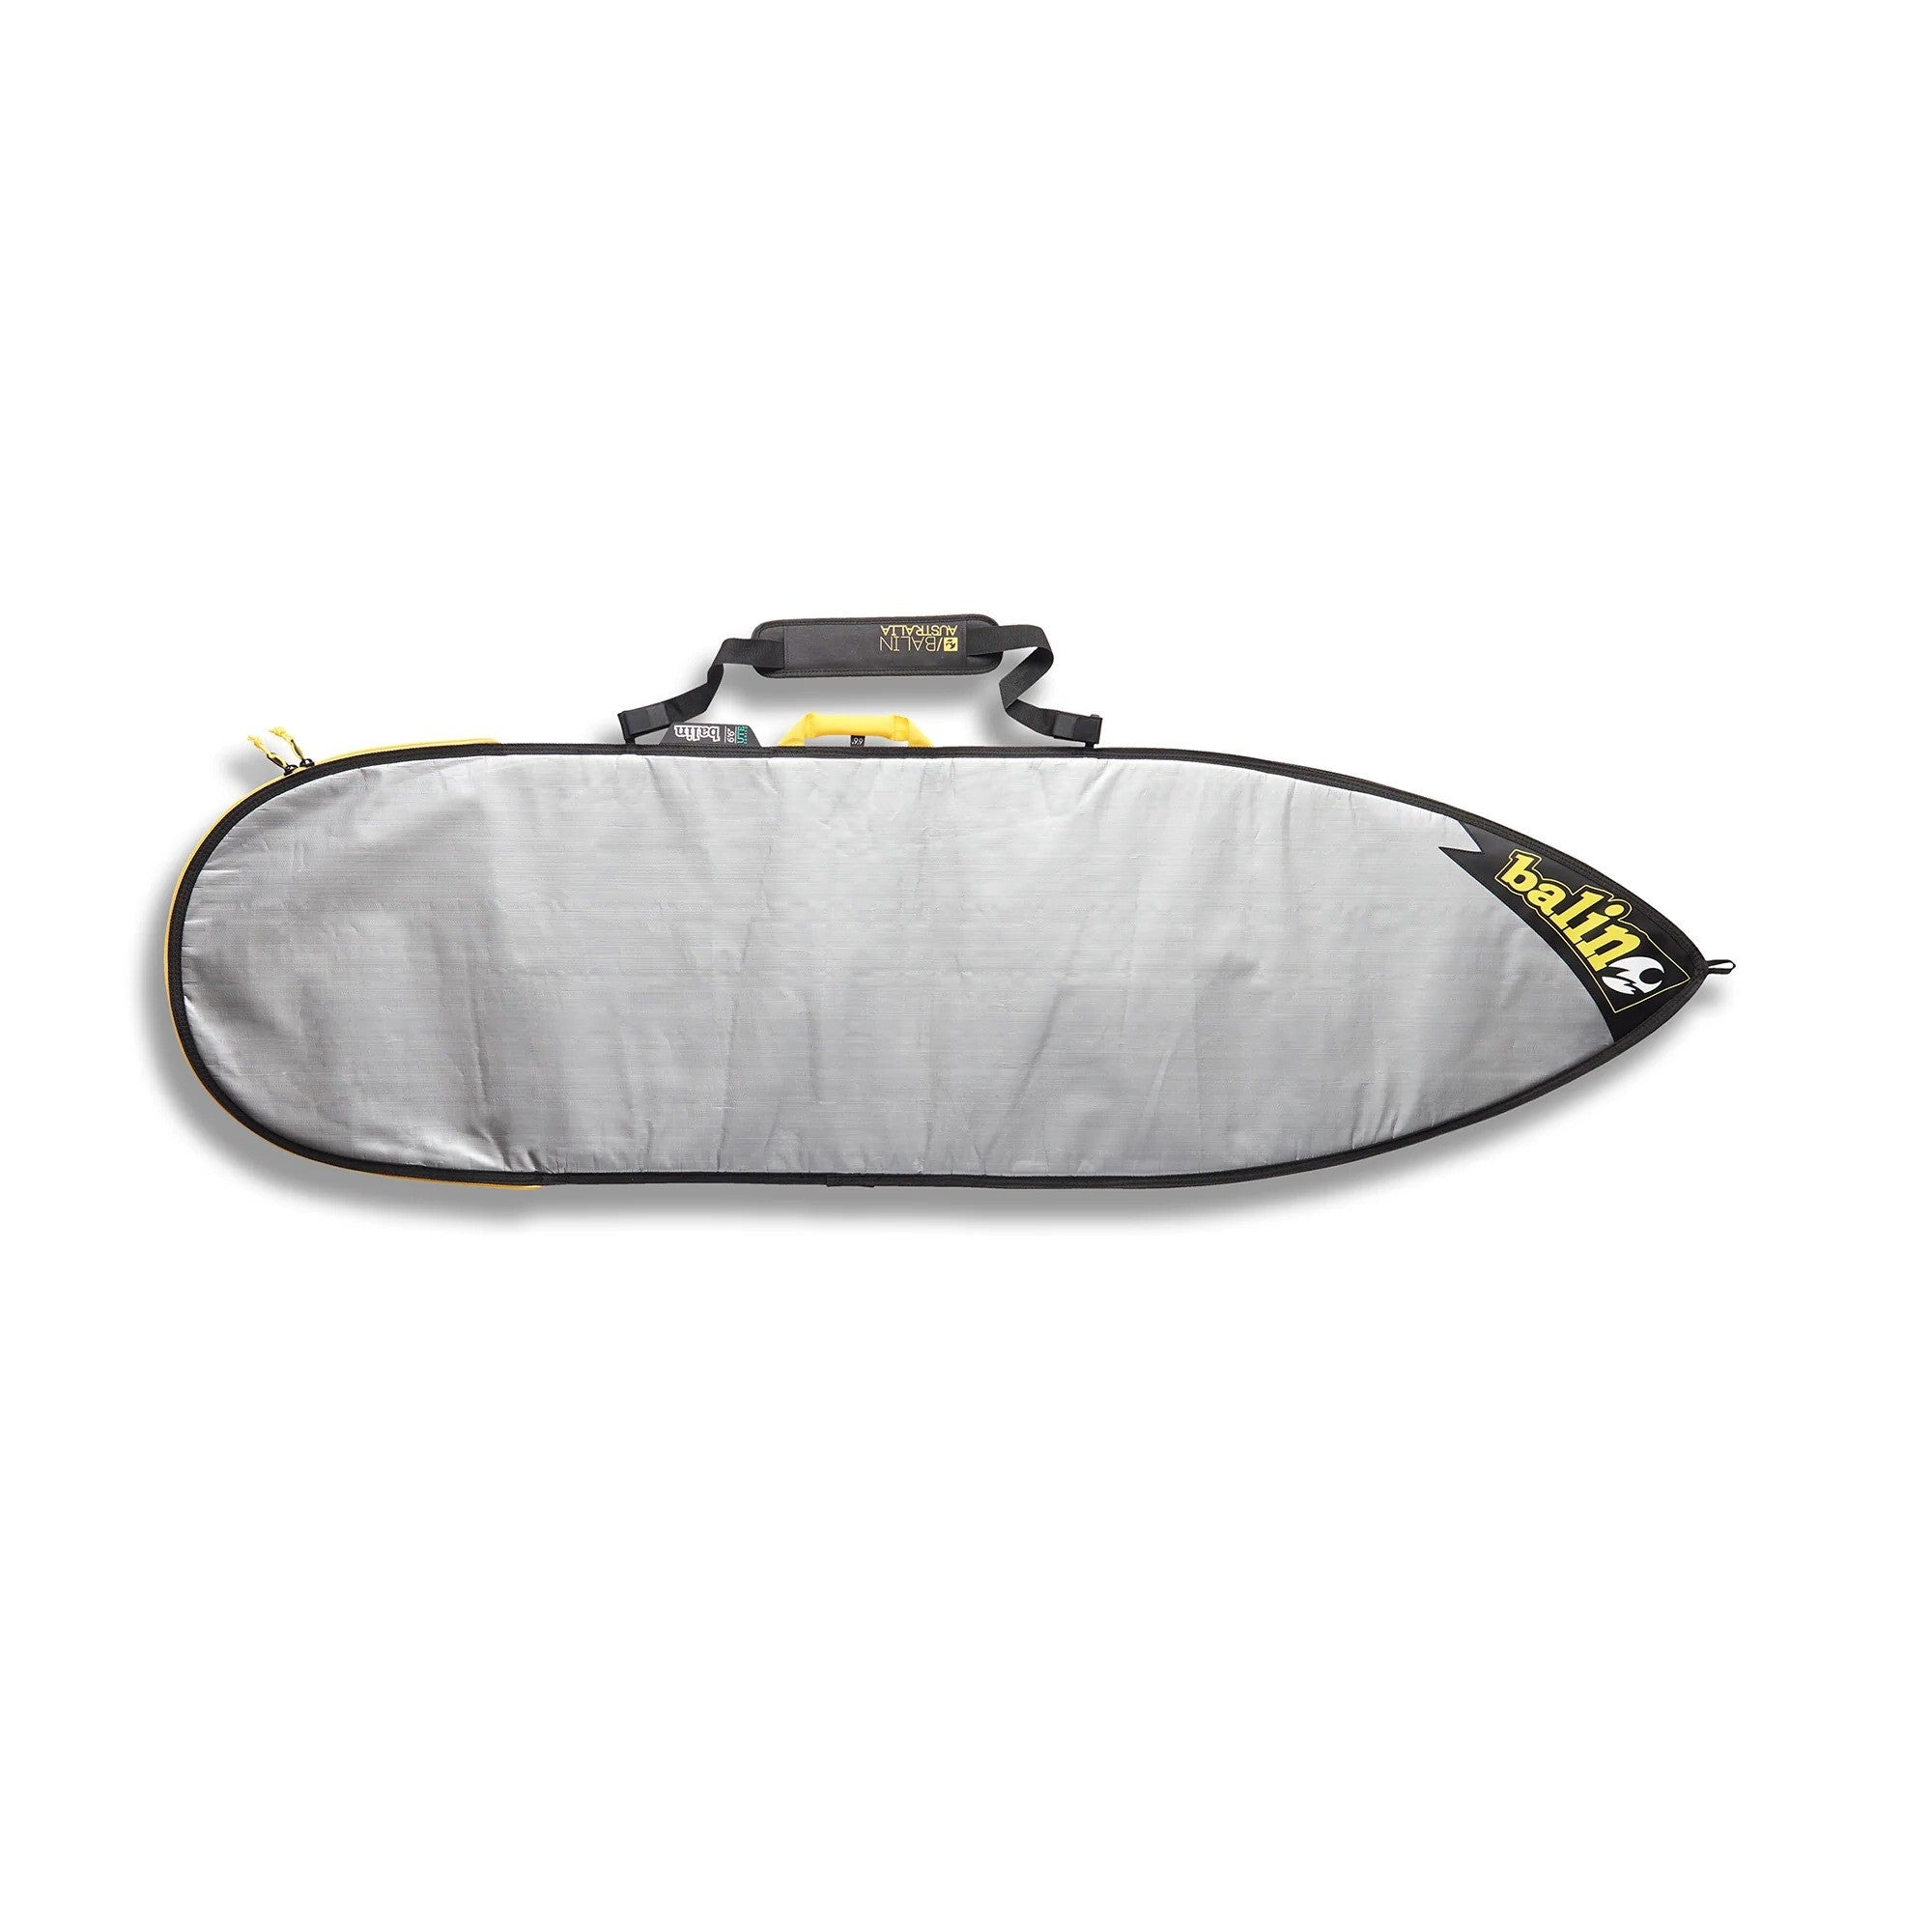 BALIN - 1 board surf bag - UTE - Shortboard 5mm - Yellow